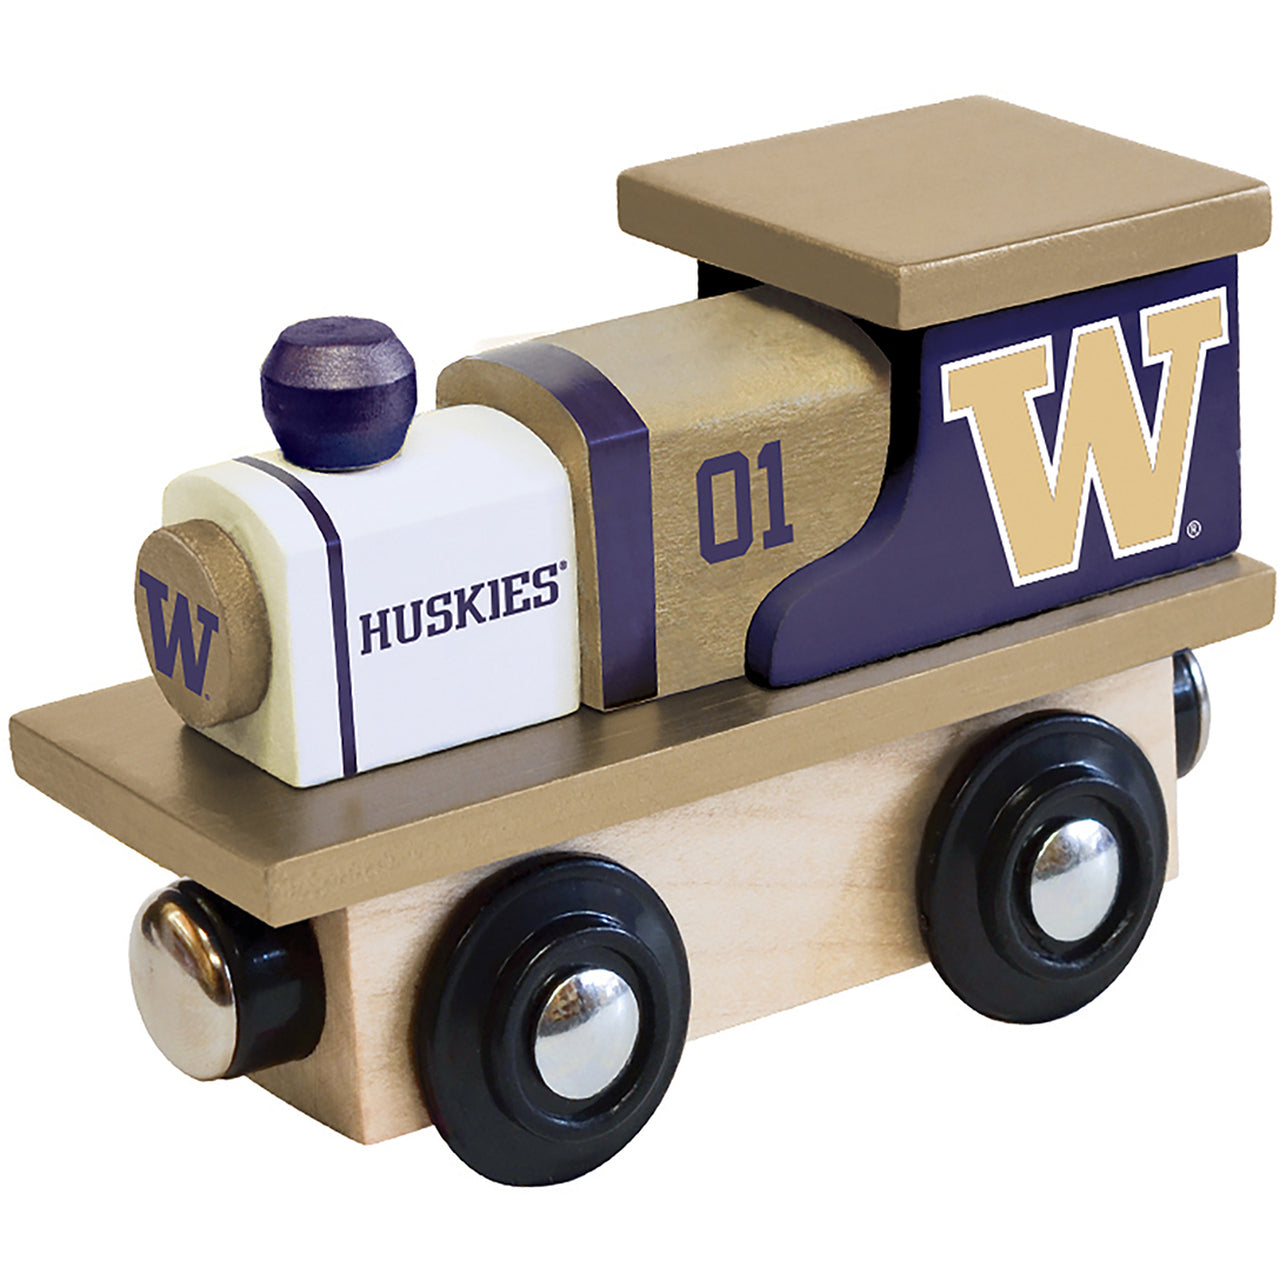 Washington Huskies Wooden Toy Train Engine by Masterpieces